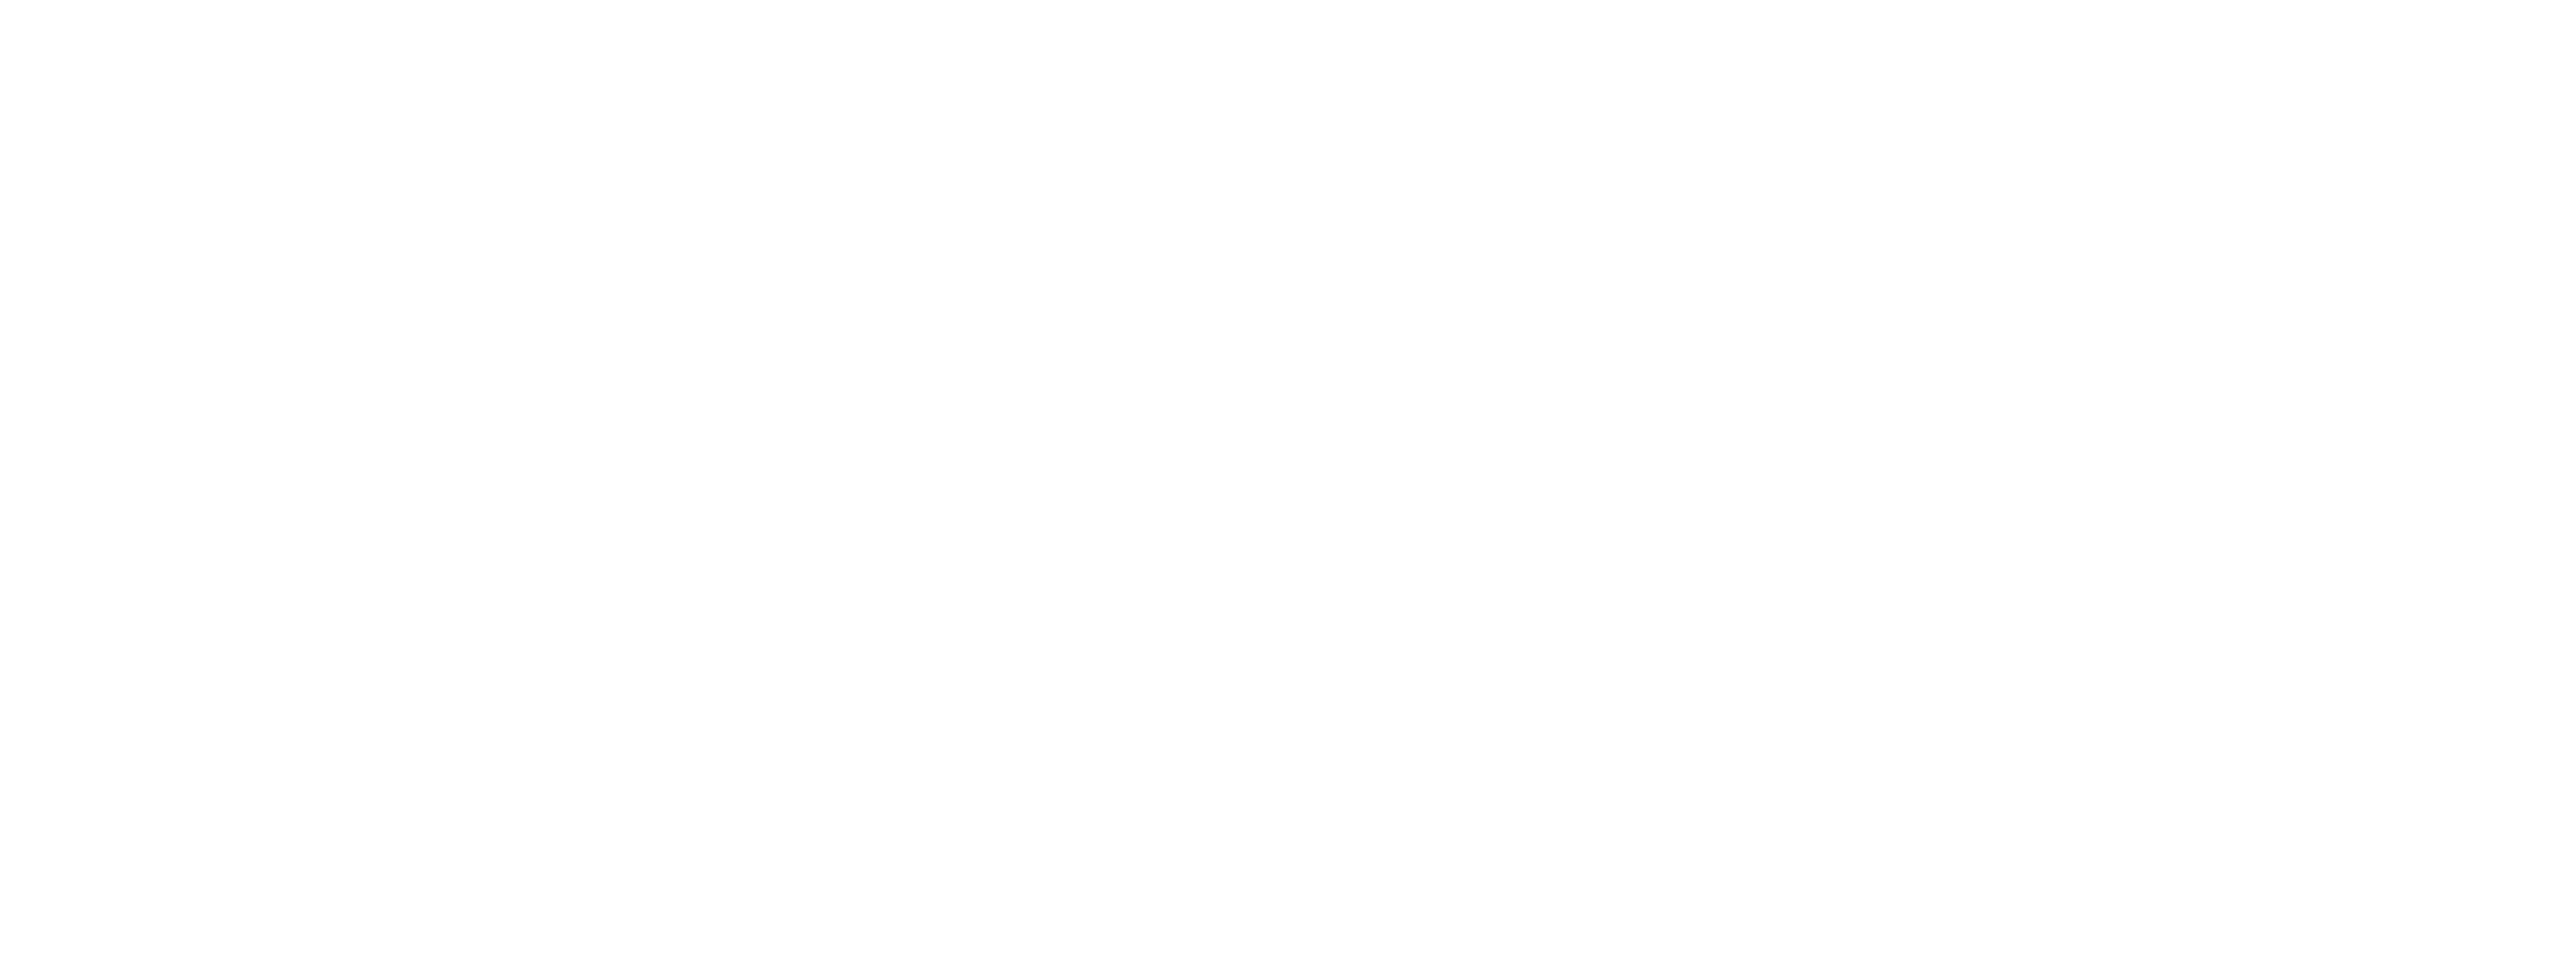 Shona Webservices